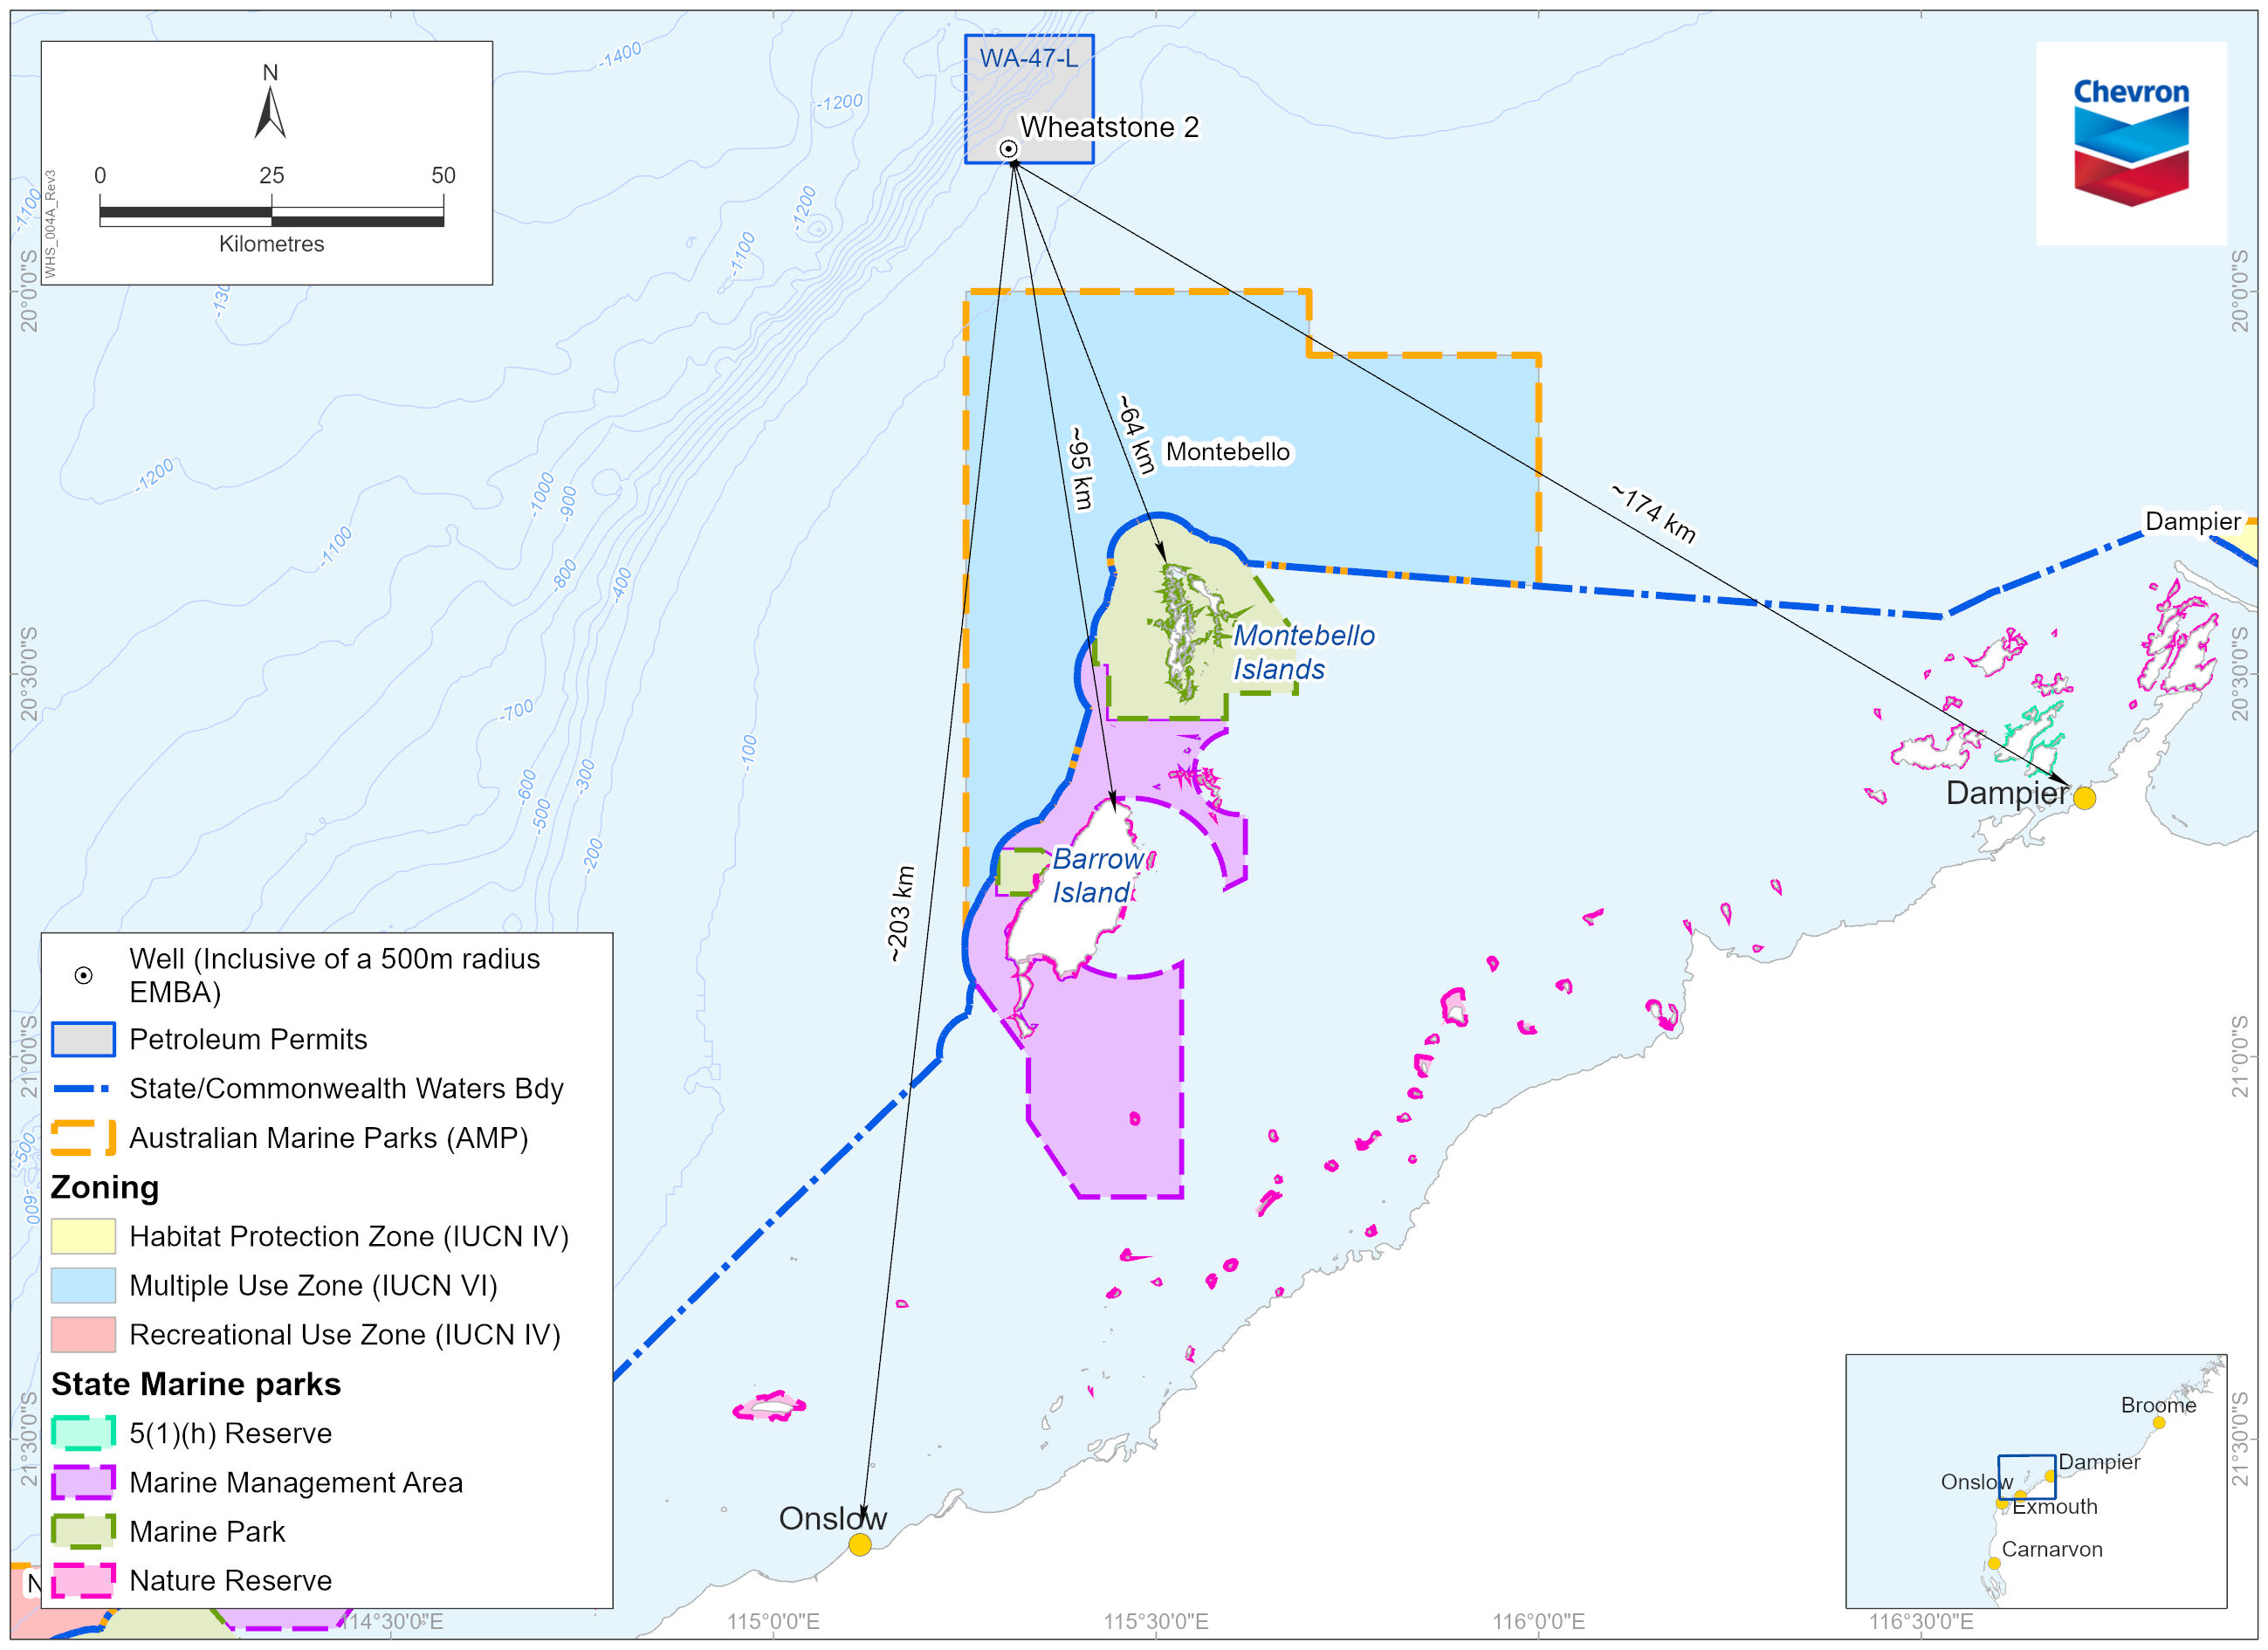 Location map - Activity: Wheatstone Project - Wheatstone-2 Wellhead Decommissioning (refer to description)